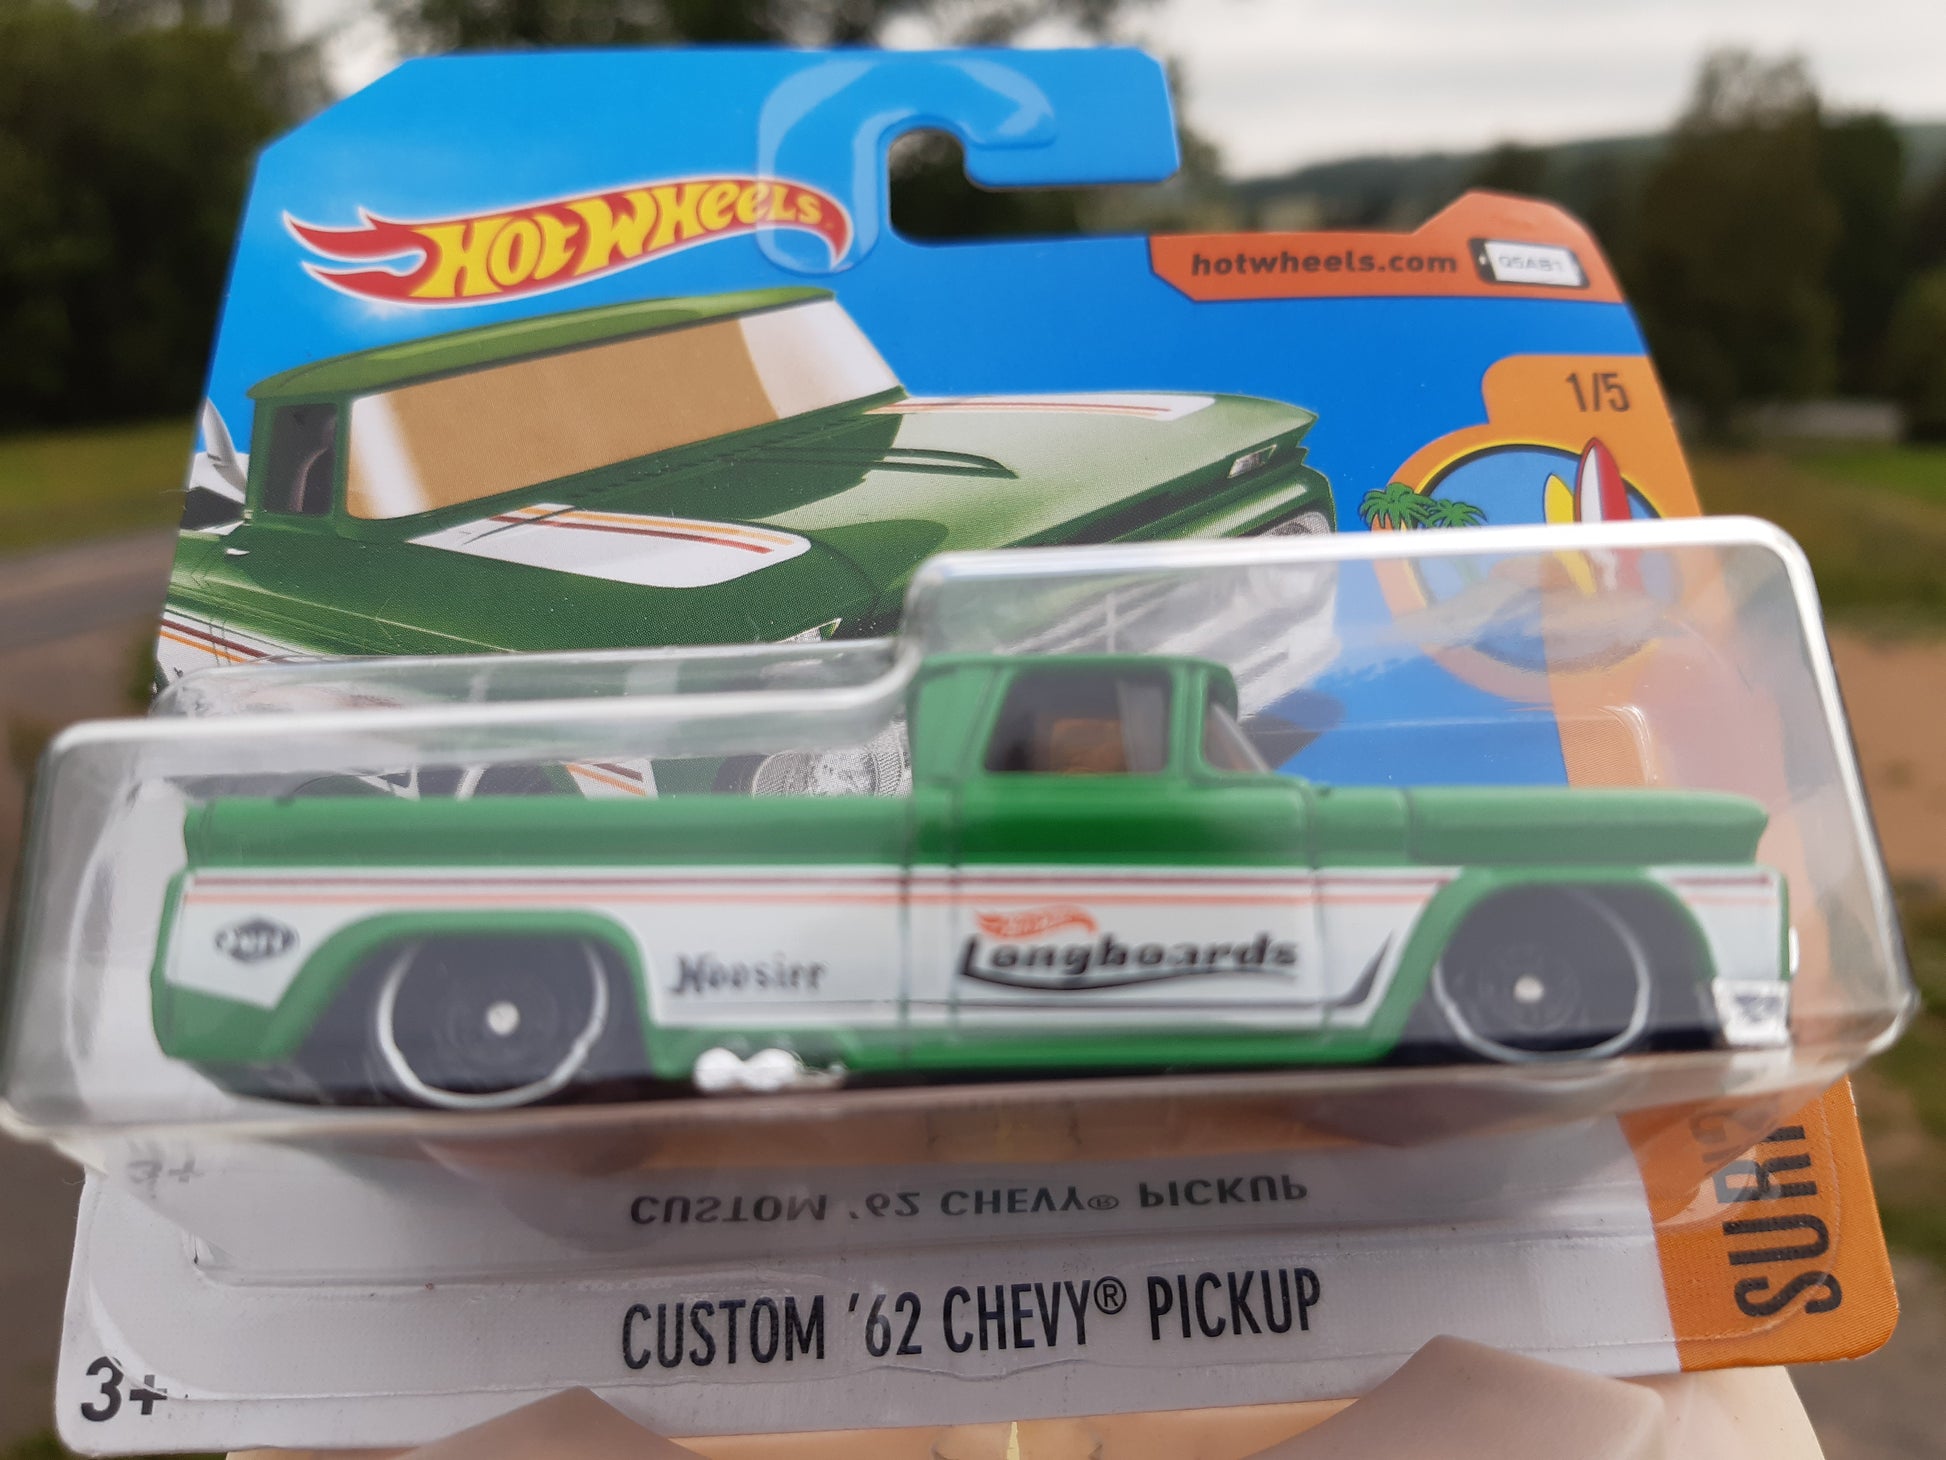 custom '62 chevy pickup